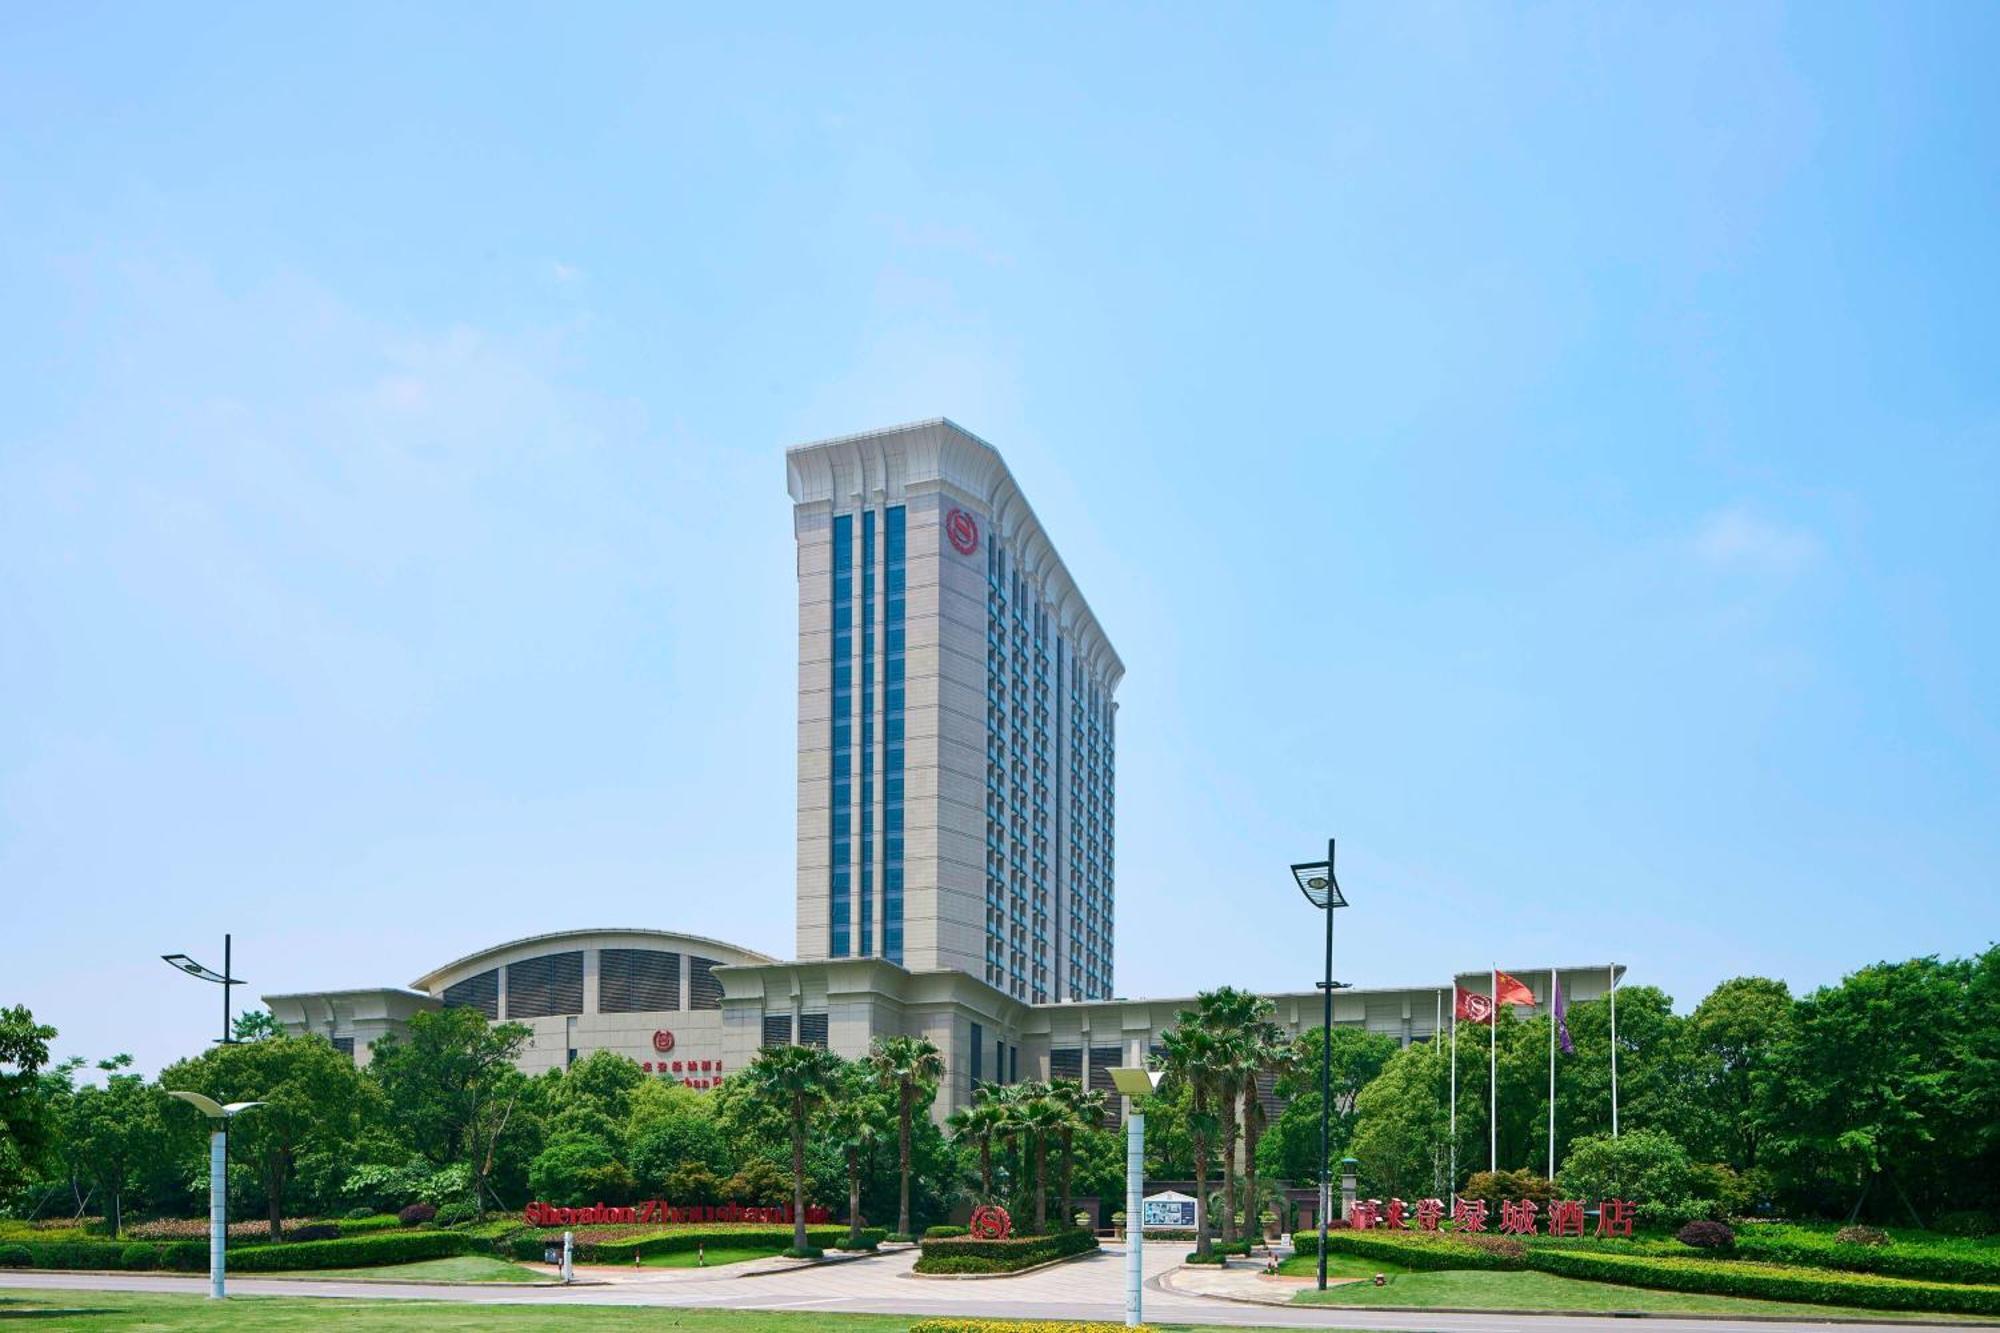 Sheraton Zhoushan Hotel Exterior photo